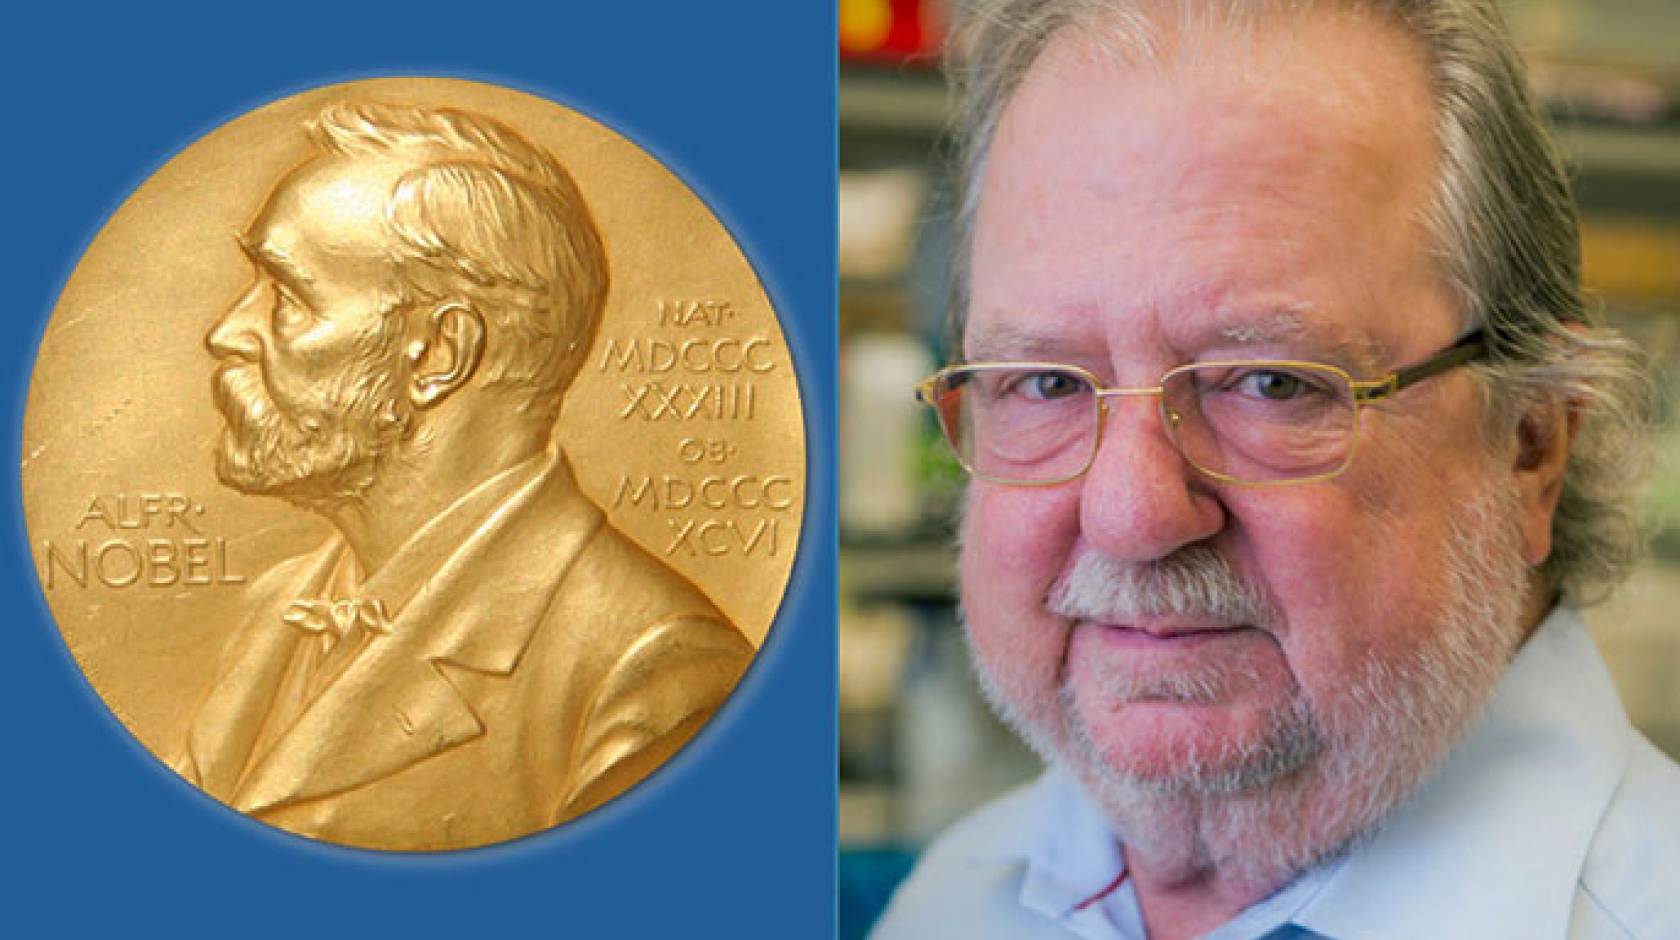 Nobel Prize with James Allison photo next to it